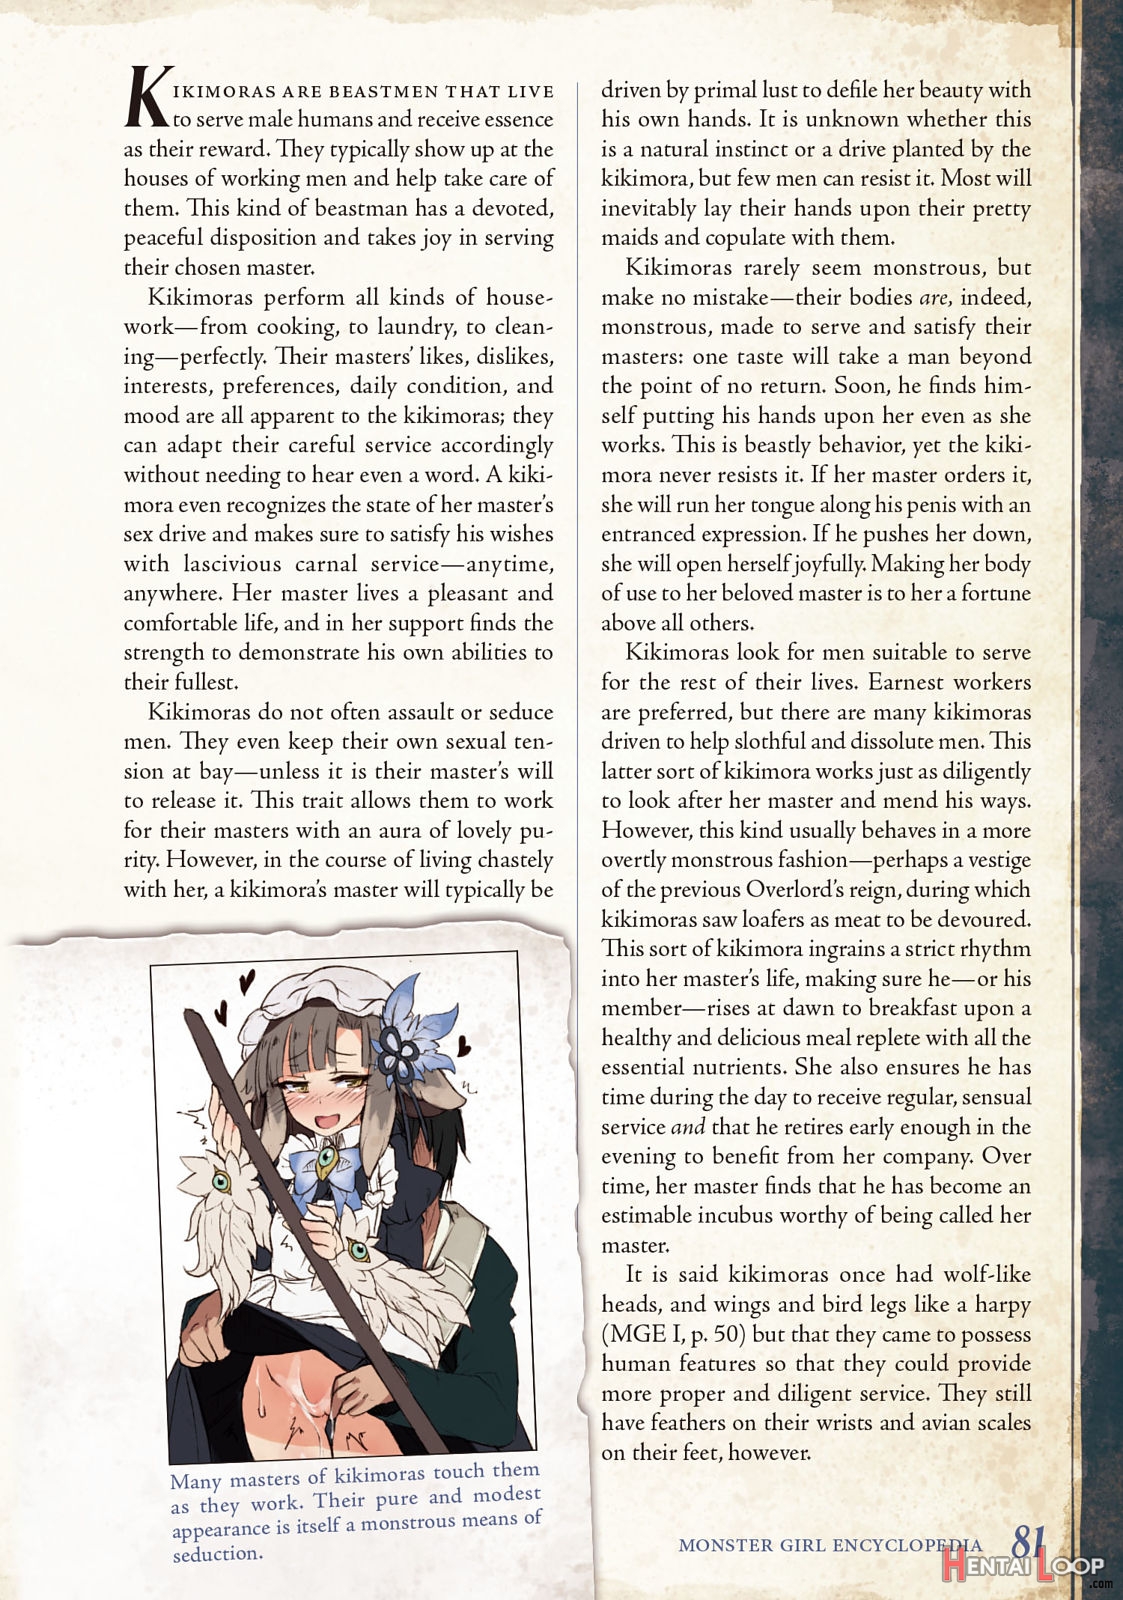 Monster Girl Encyclopedia Vol. 2 page 82